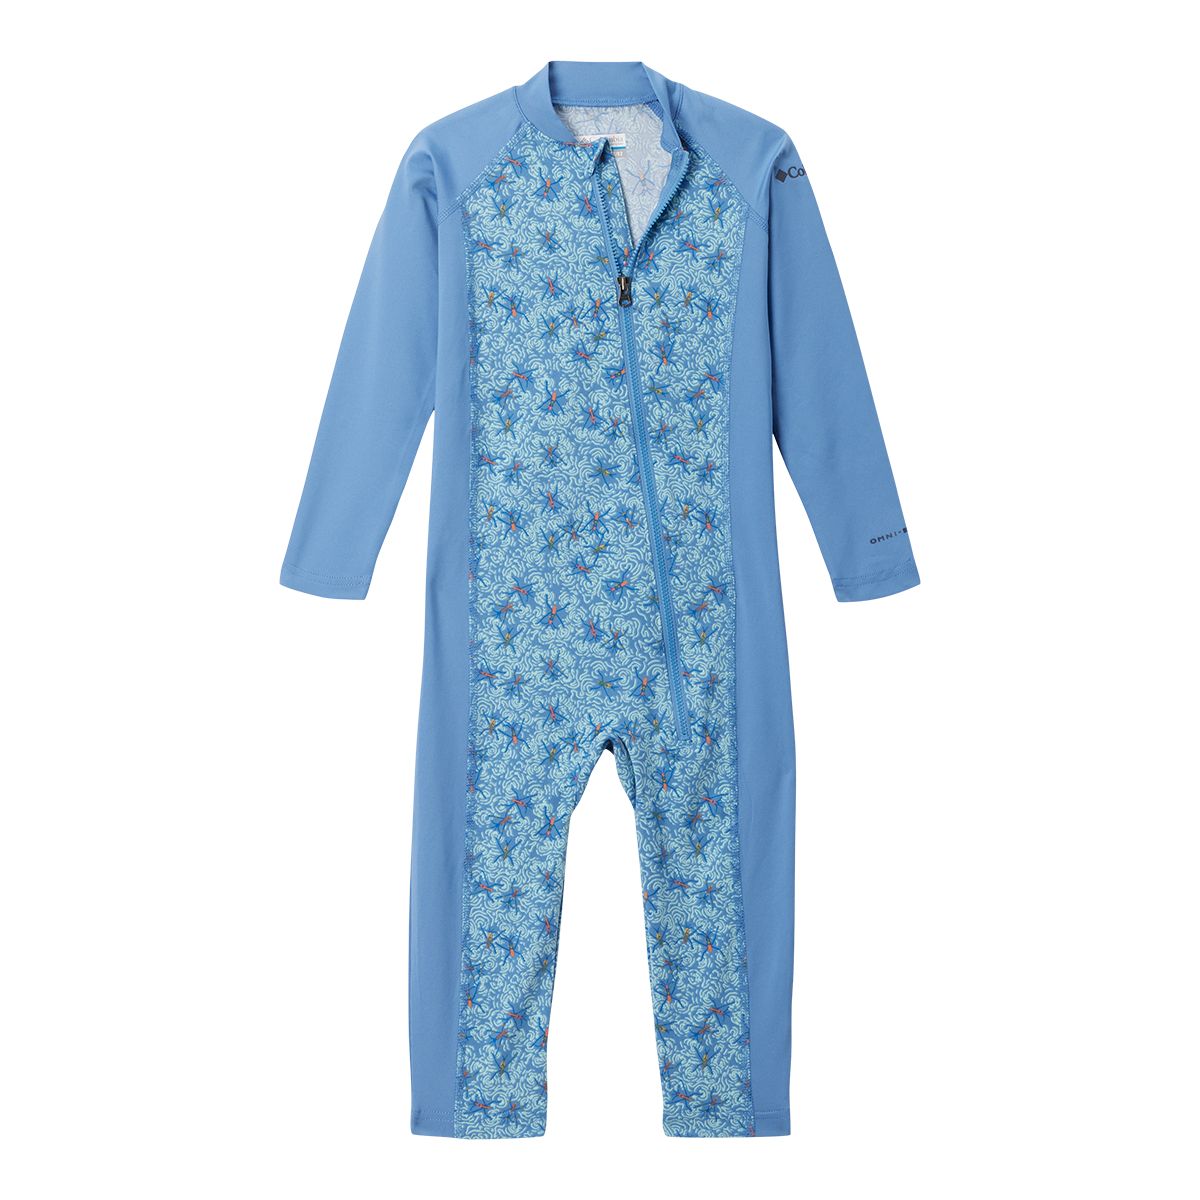 Image of Columbia Boys' Toddler Sandy Shores Sungaurd Suit